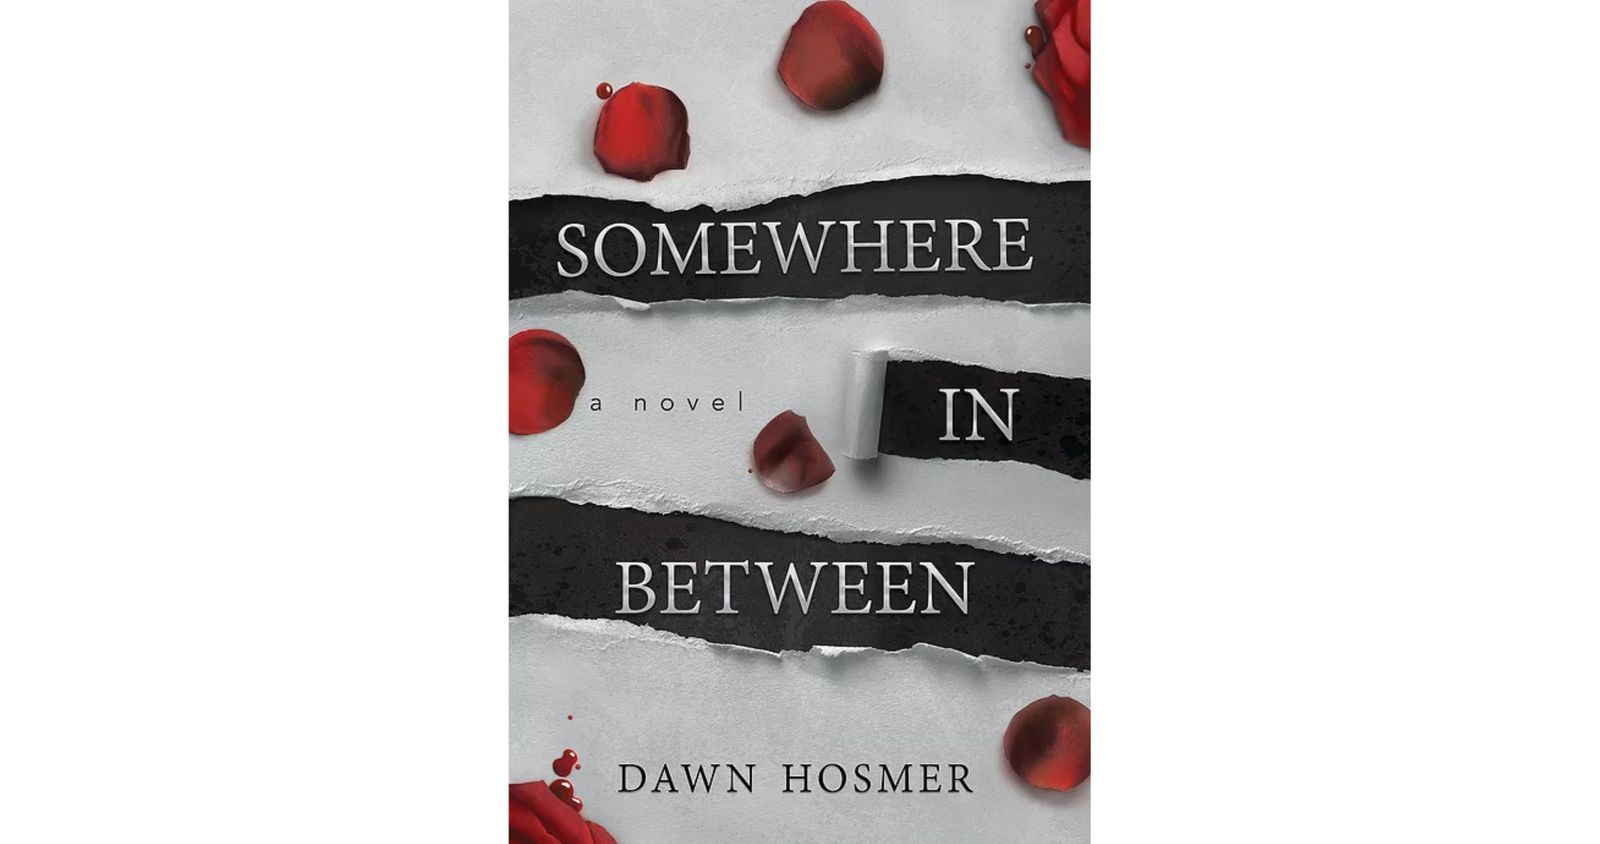 Somewhere in Between by Dawn Hosmer